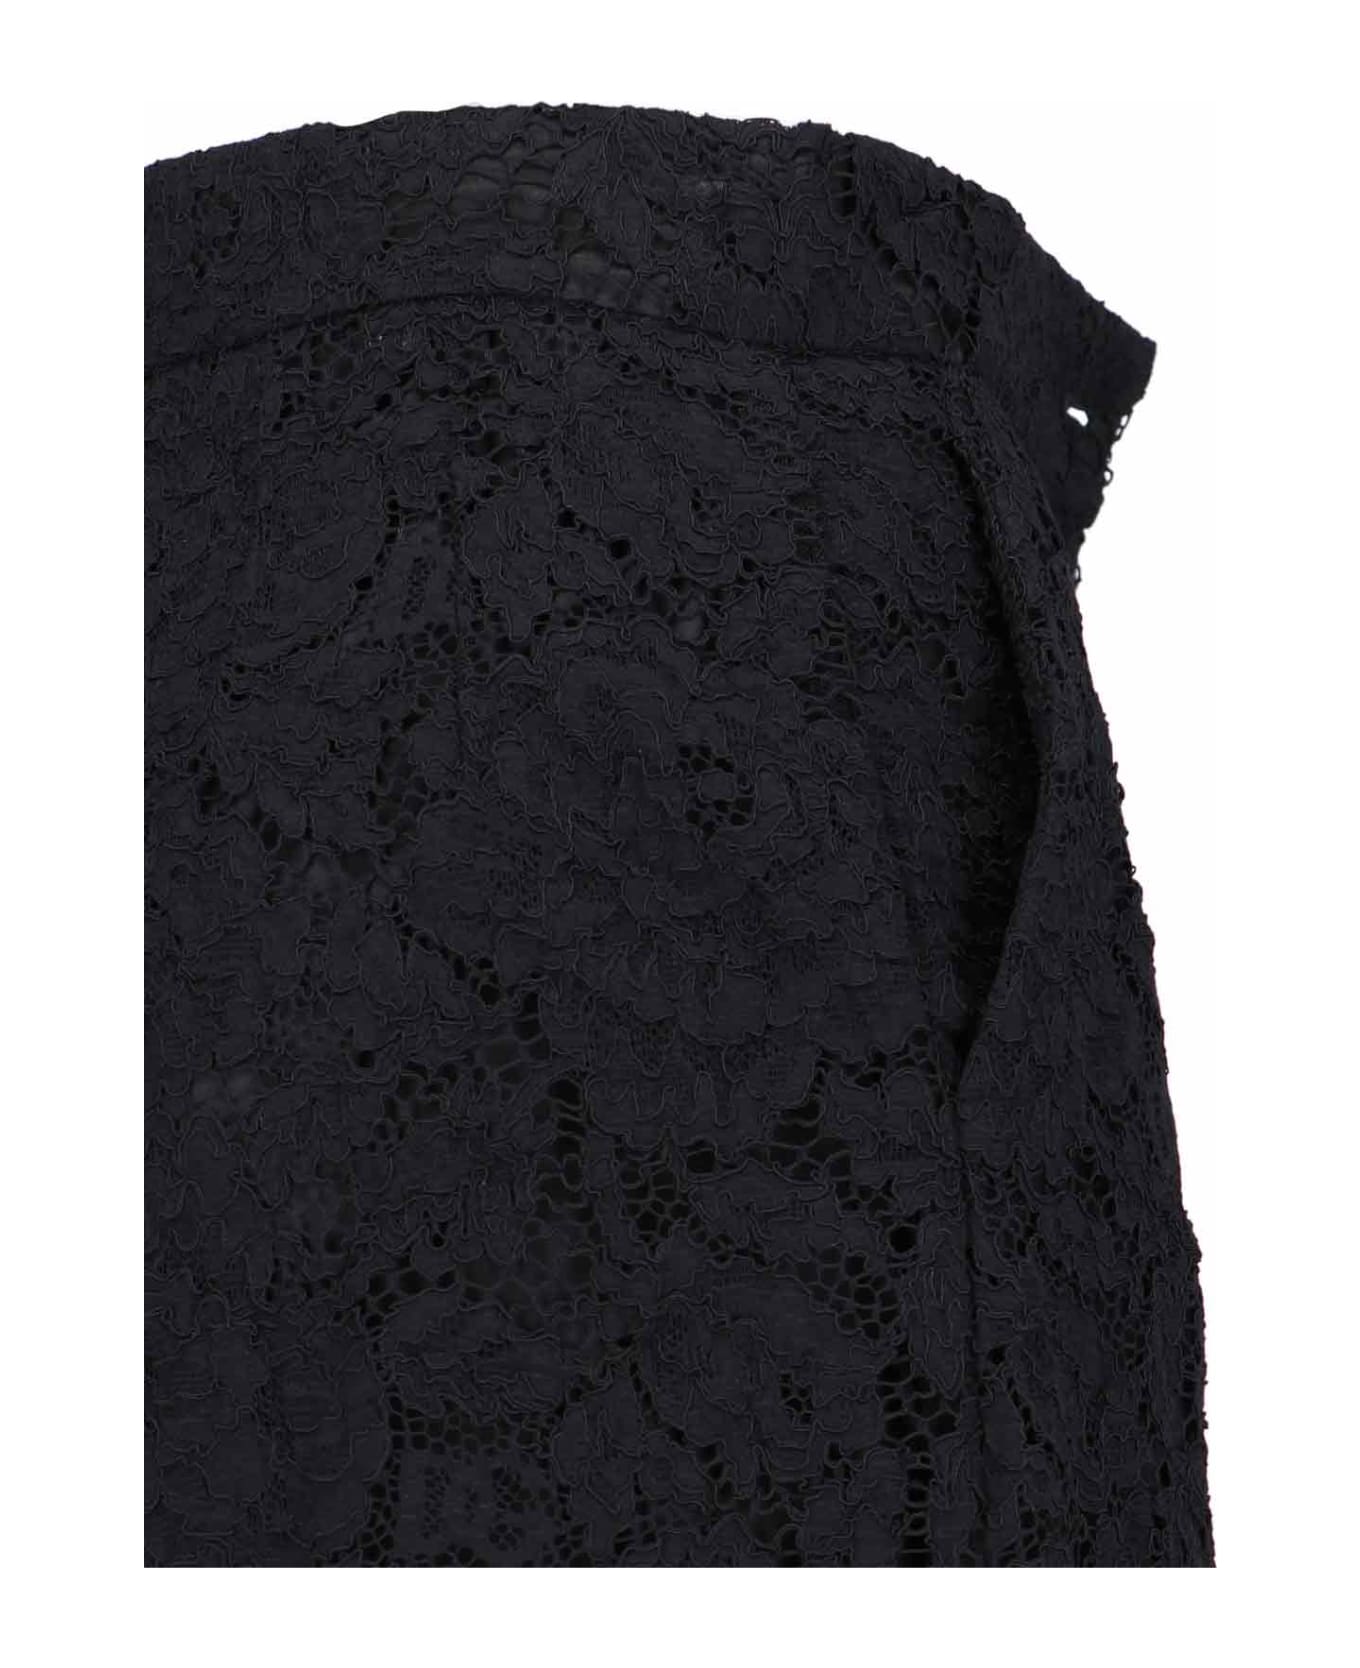 Dolce & Gabbana Flare Lace Pants - Black  